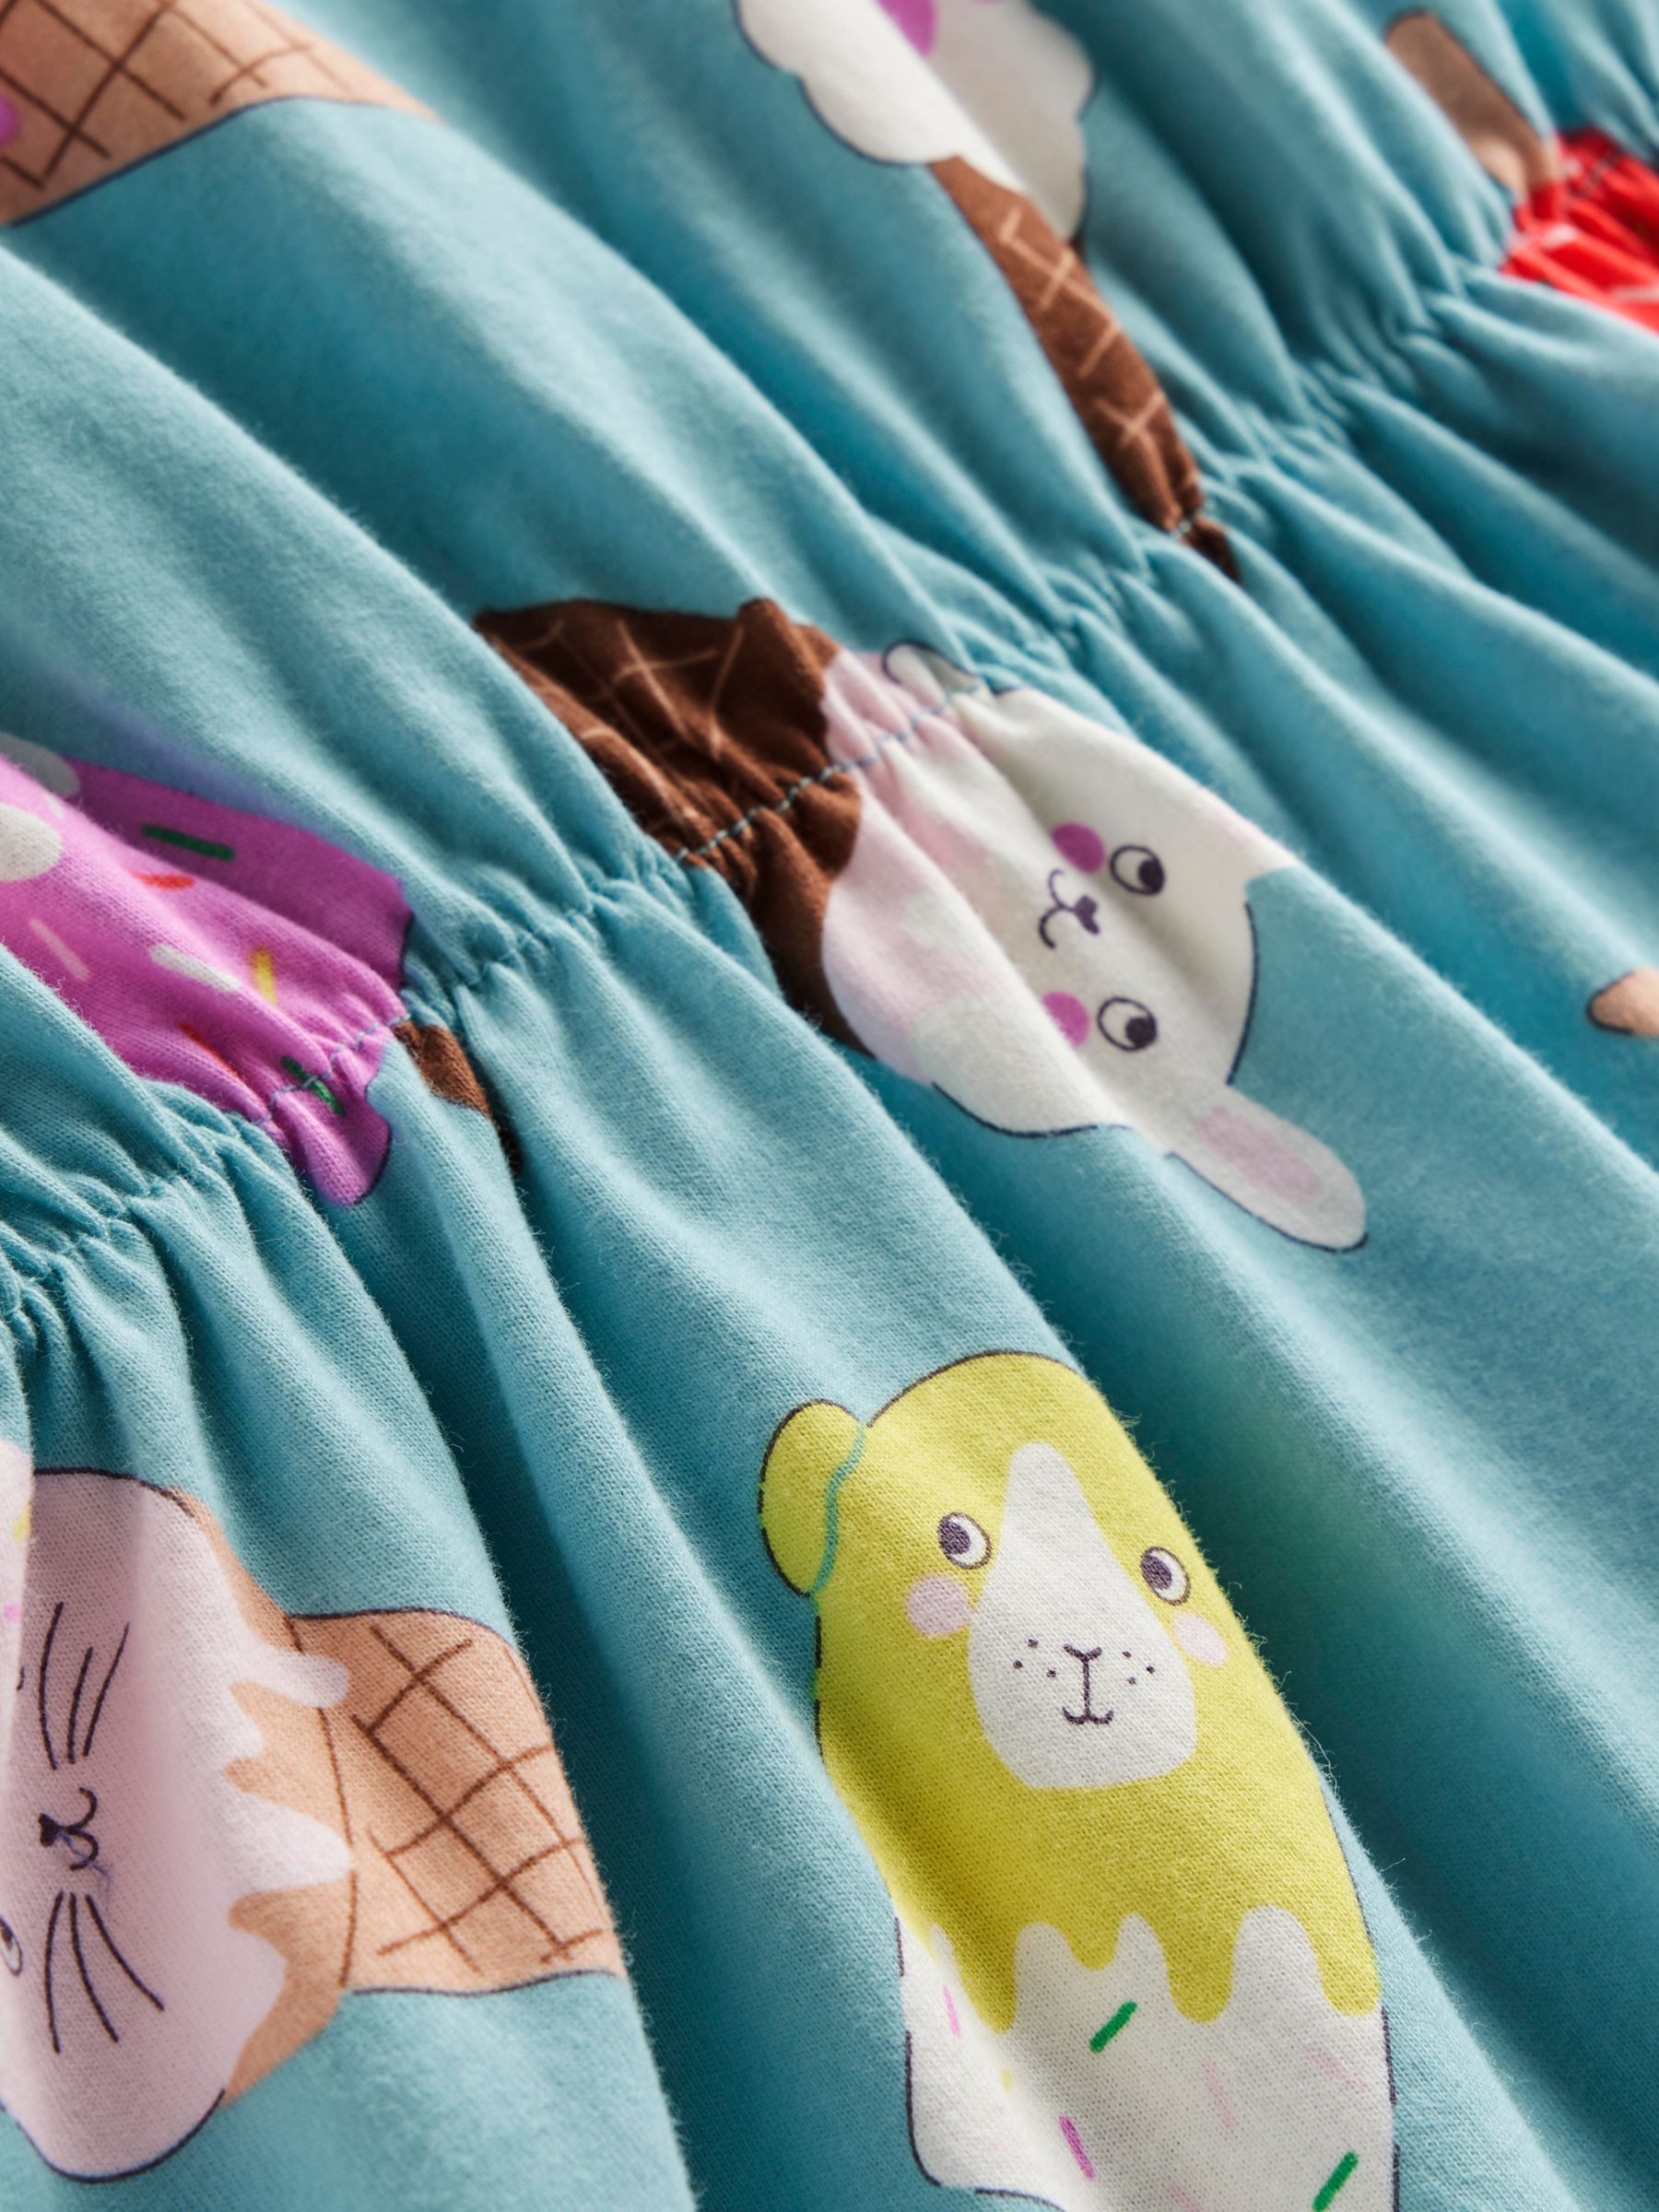 Mini Boden Kids' Animal Ice Cream Print Frill Sleeve Jersey Dress, Aqua Sea, 6-7Y